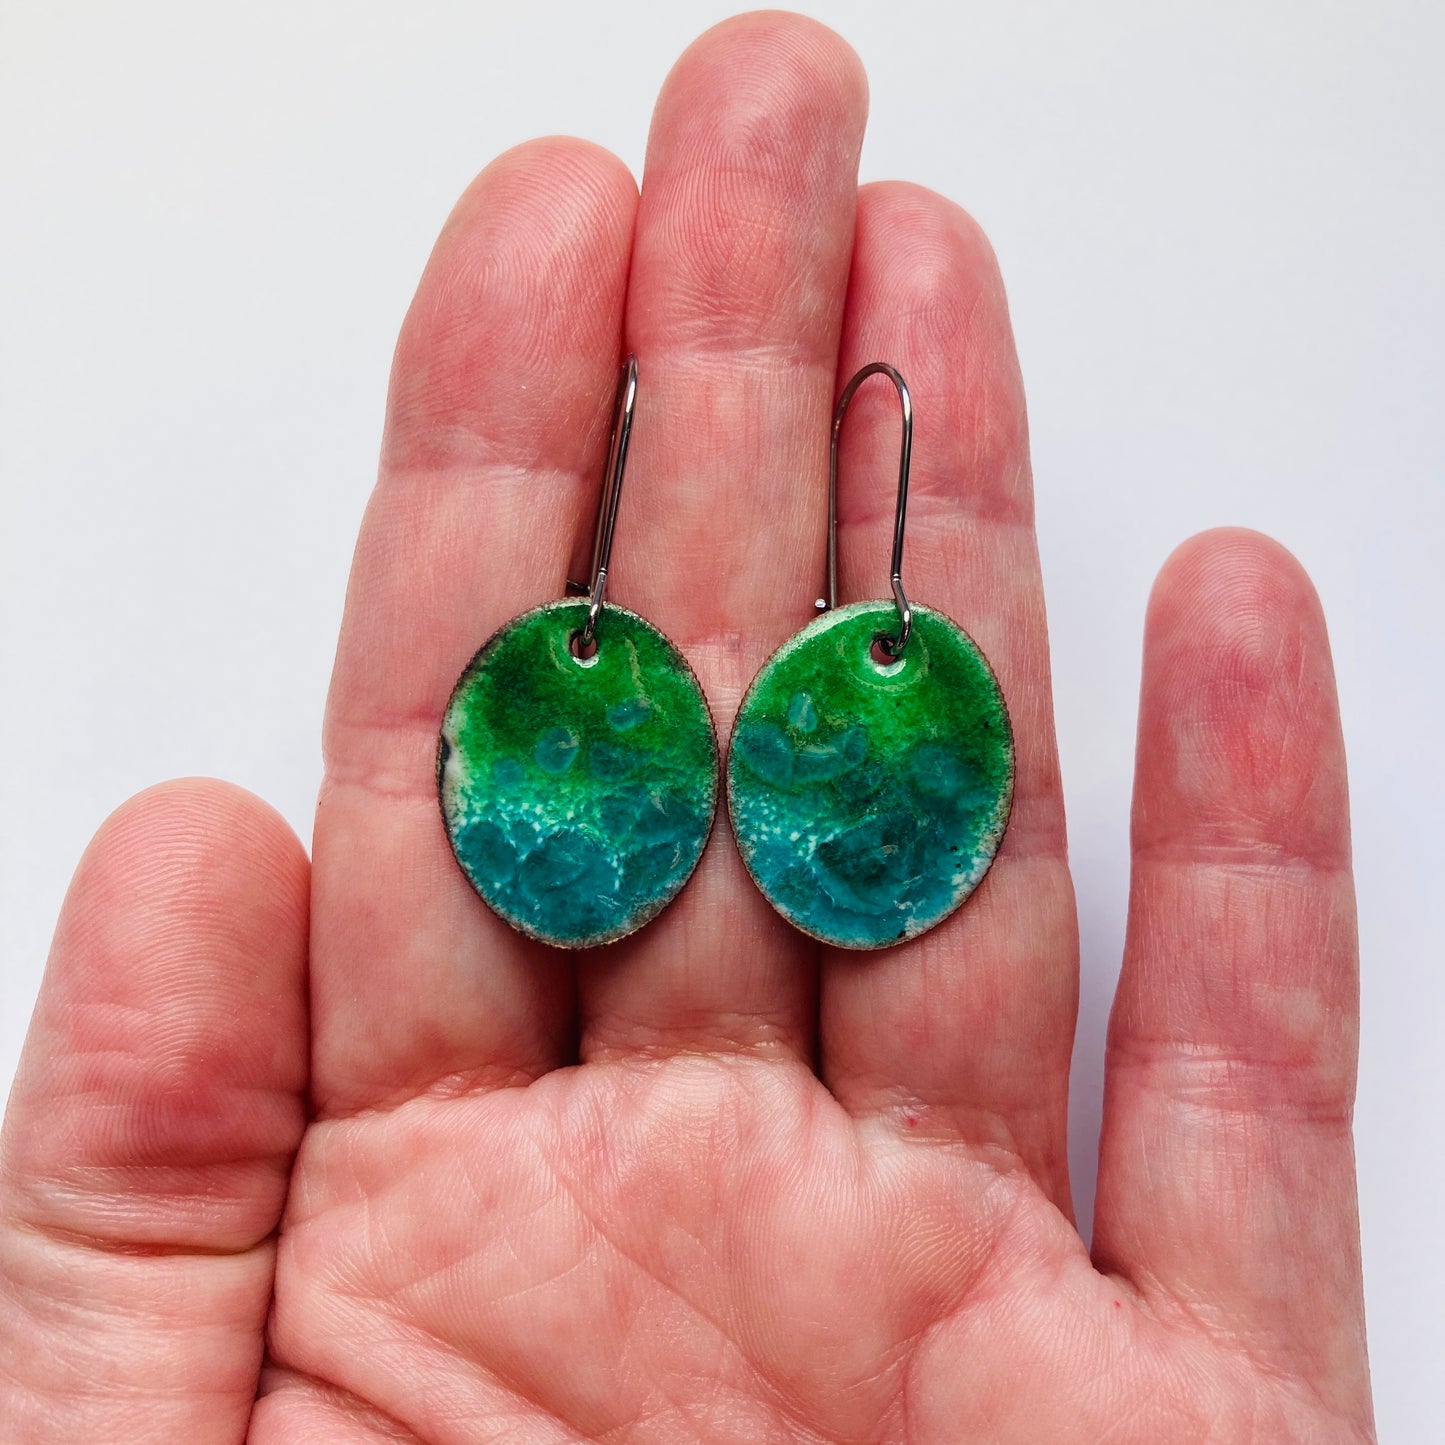 Blue/Green Enameled Coin Earrings